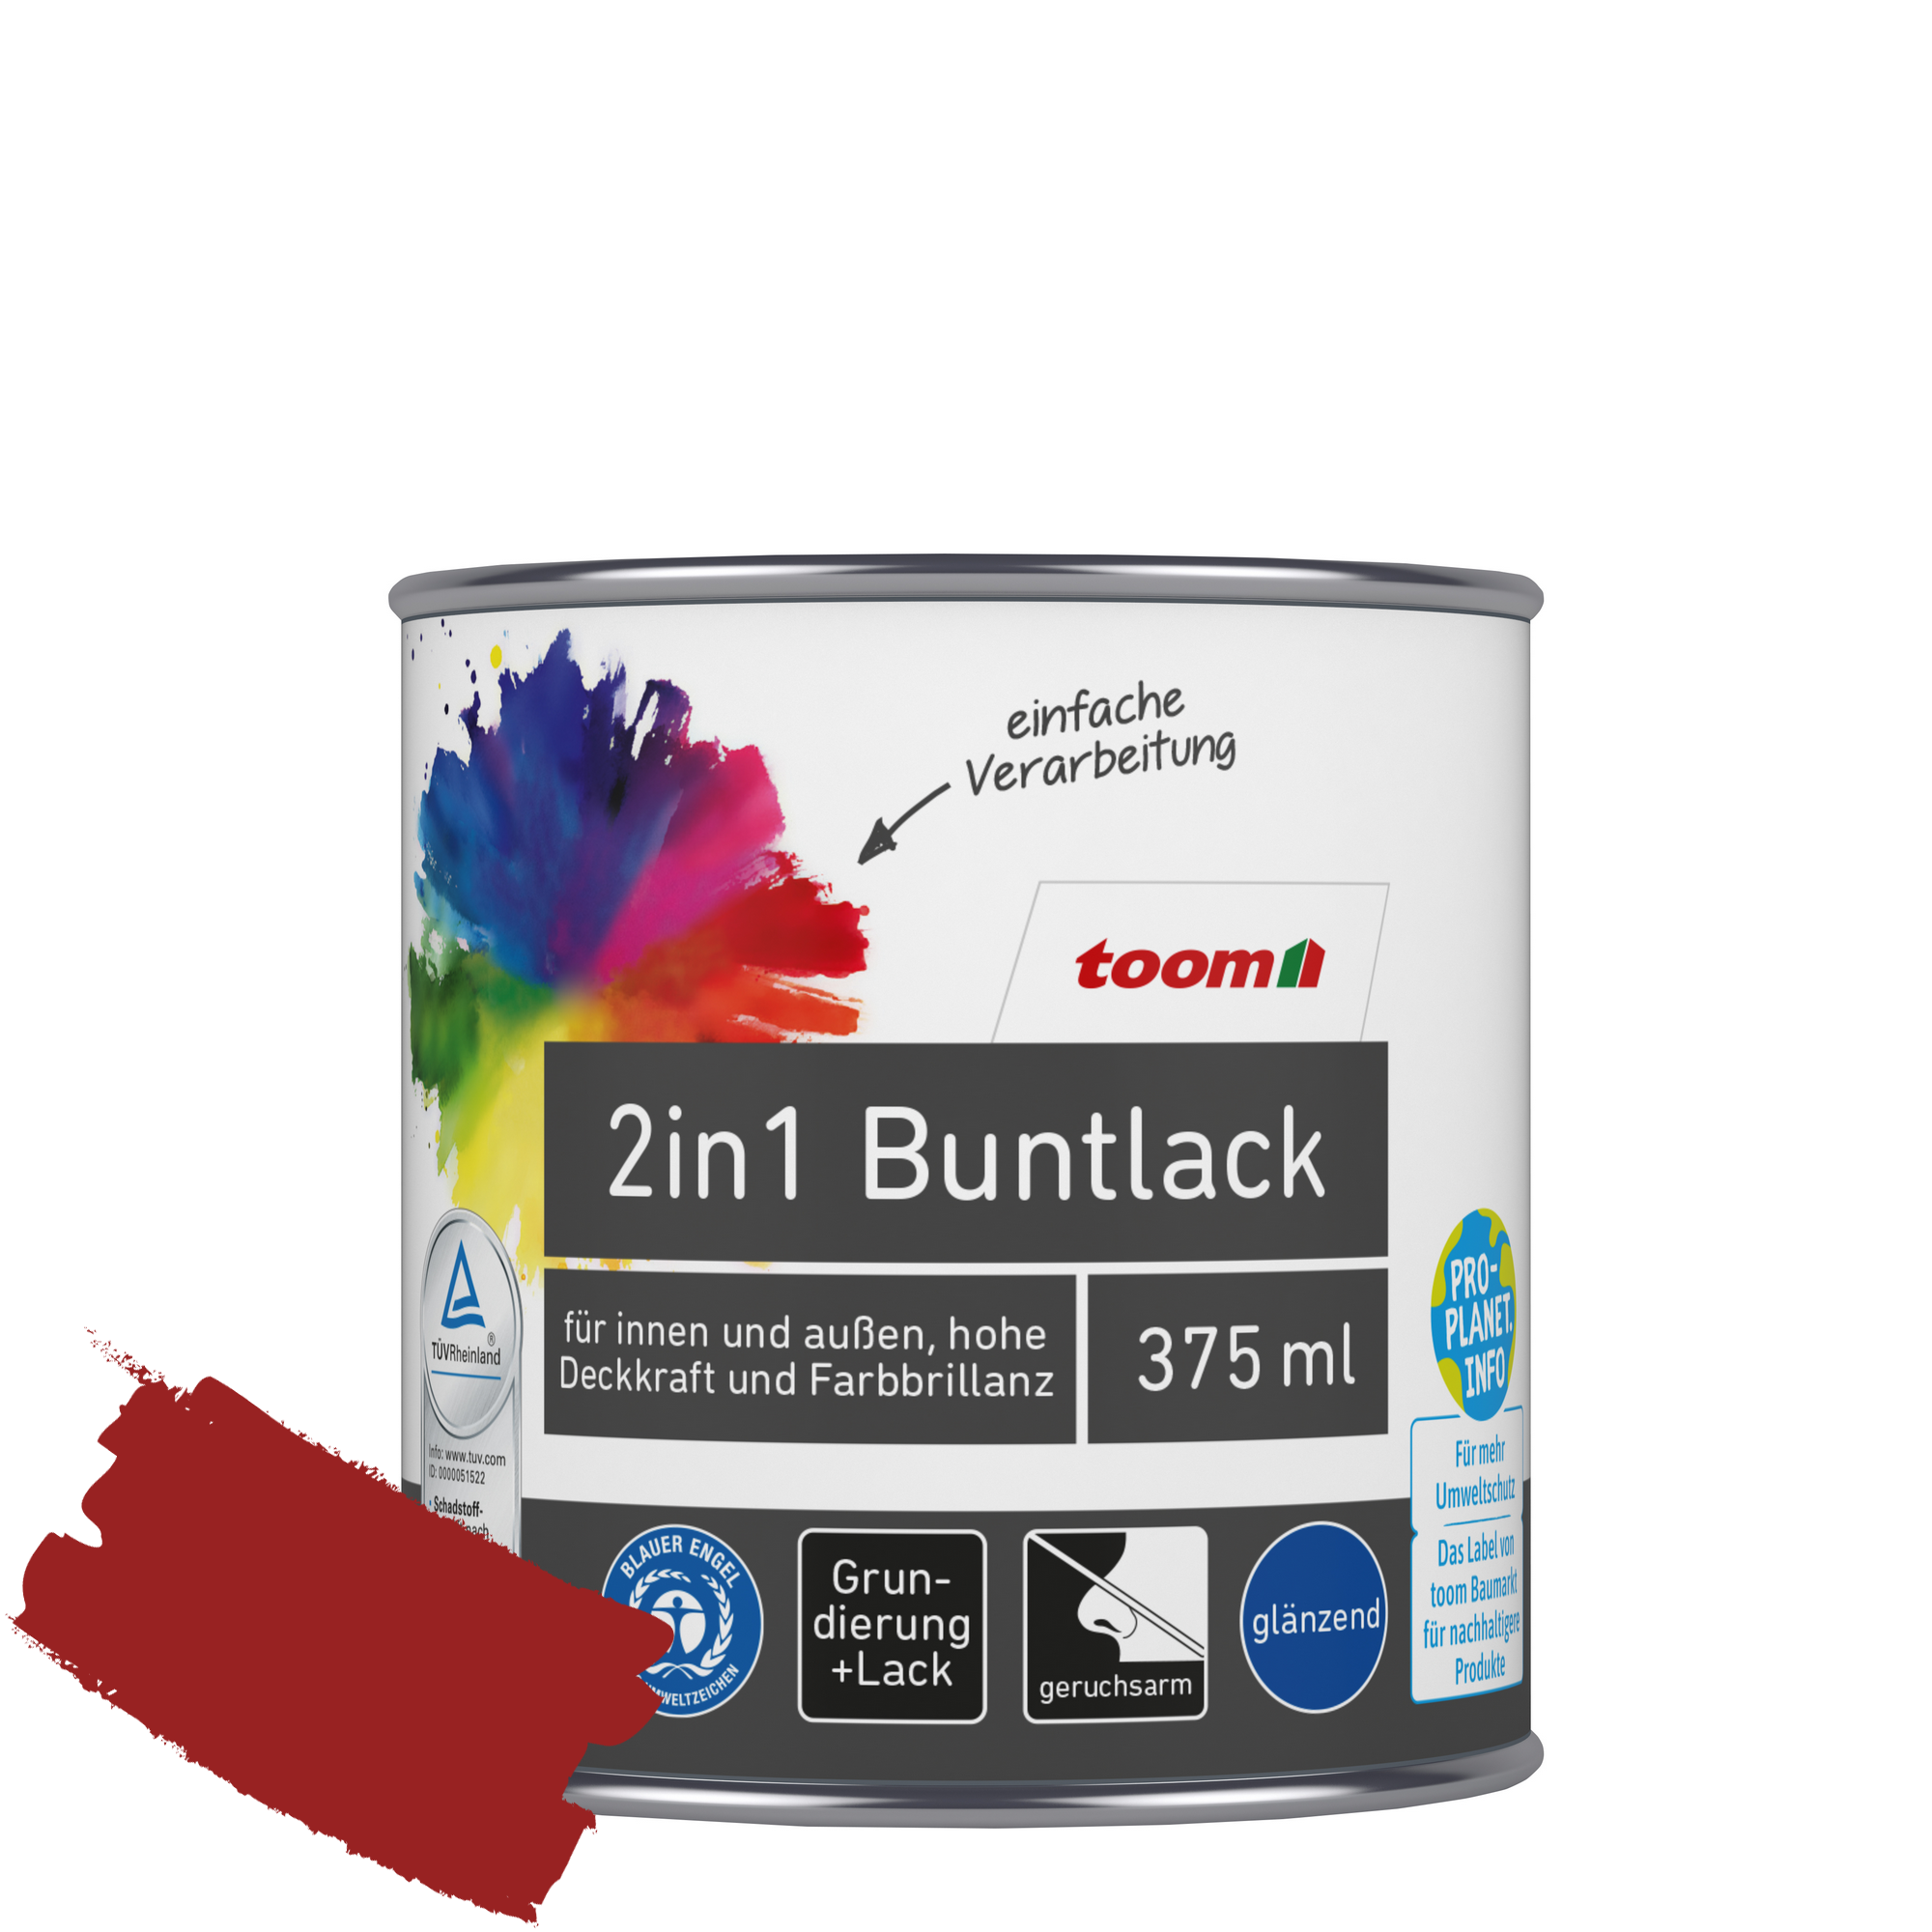 2in1 Buntlack 'Mohnblume' feuerrot glänzend 375 ml + product picture